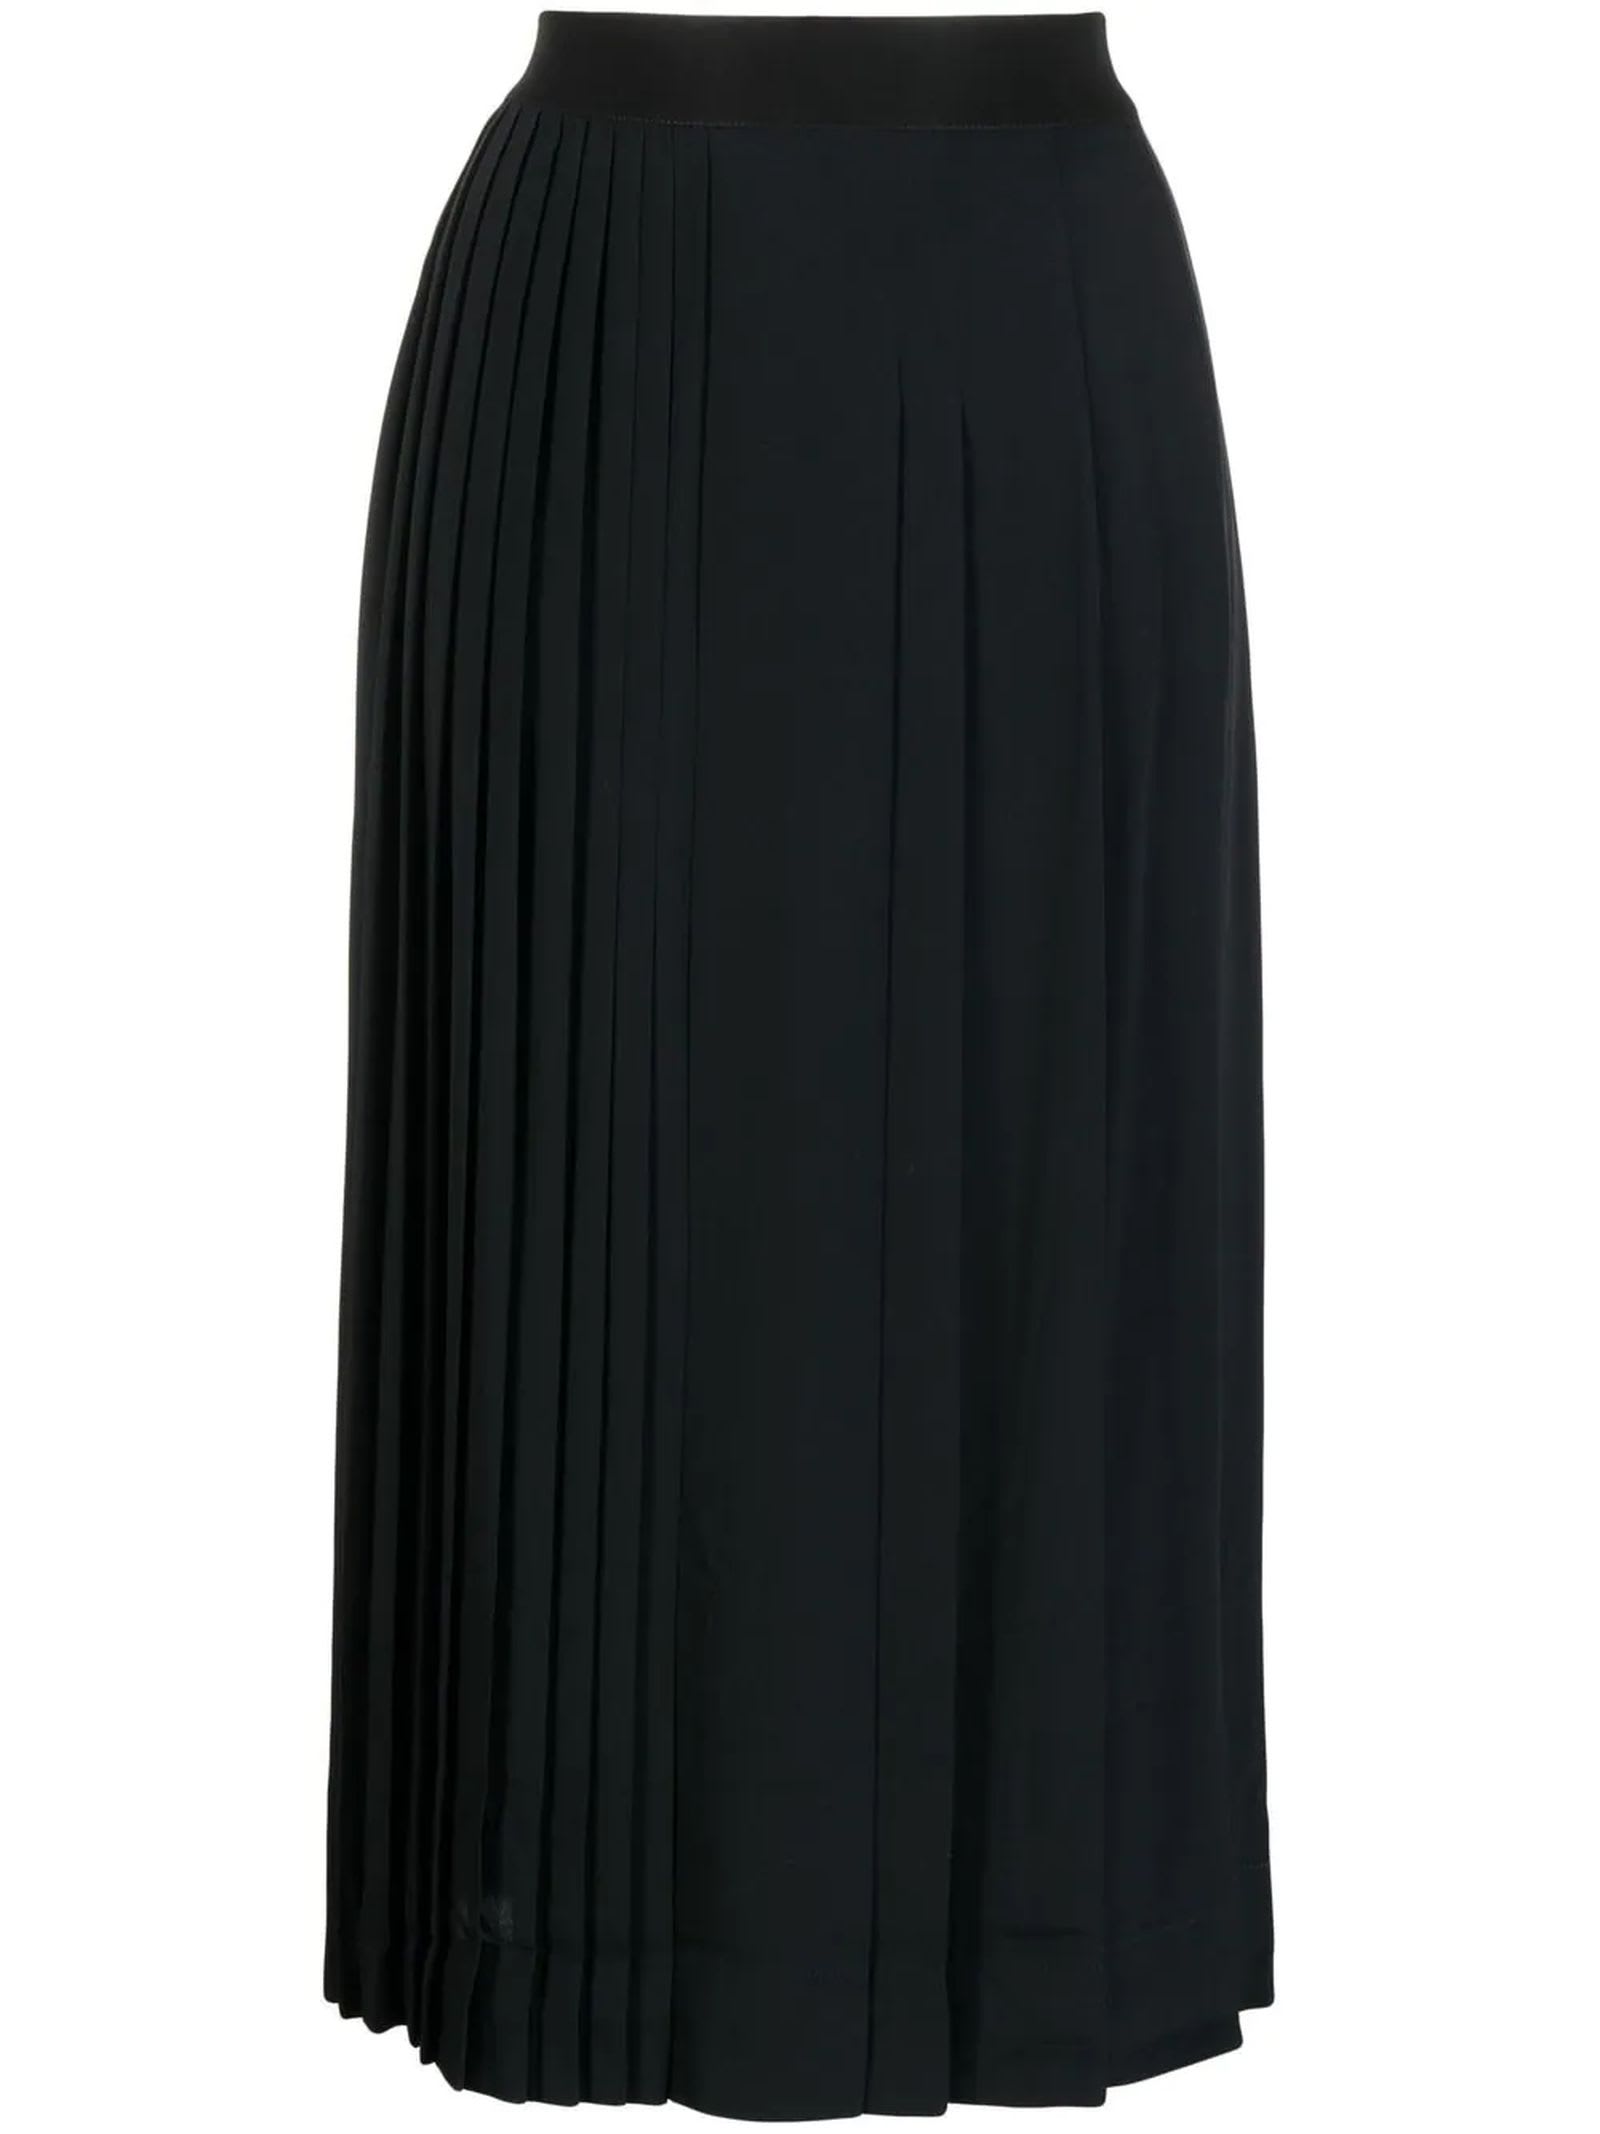 N.21 Black Silk Blend Skirt